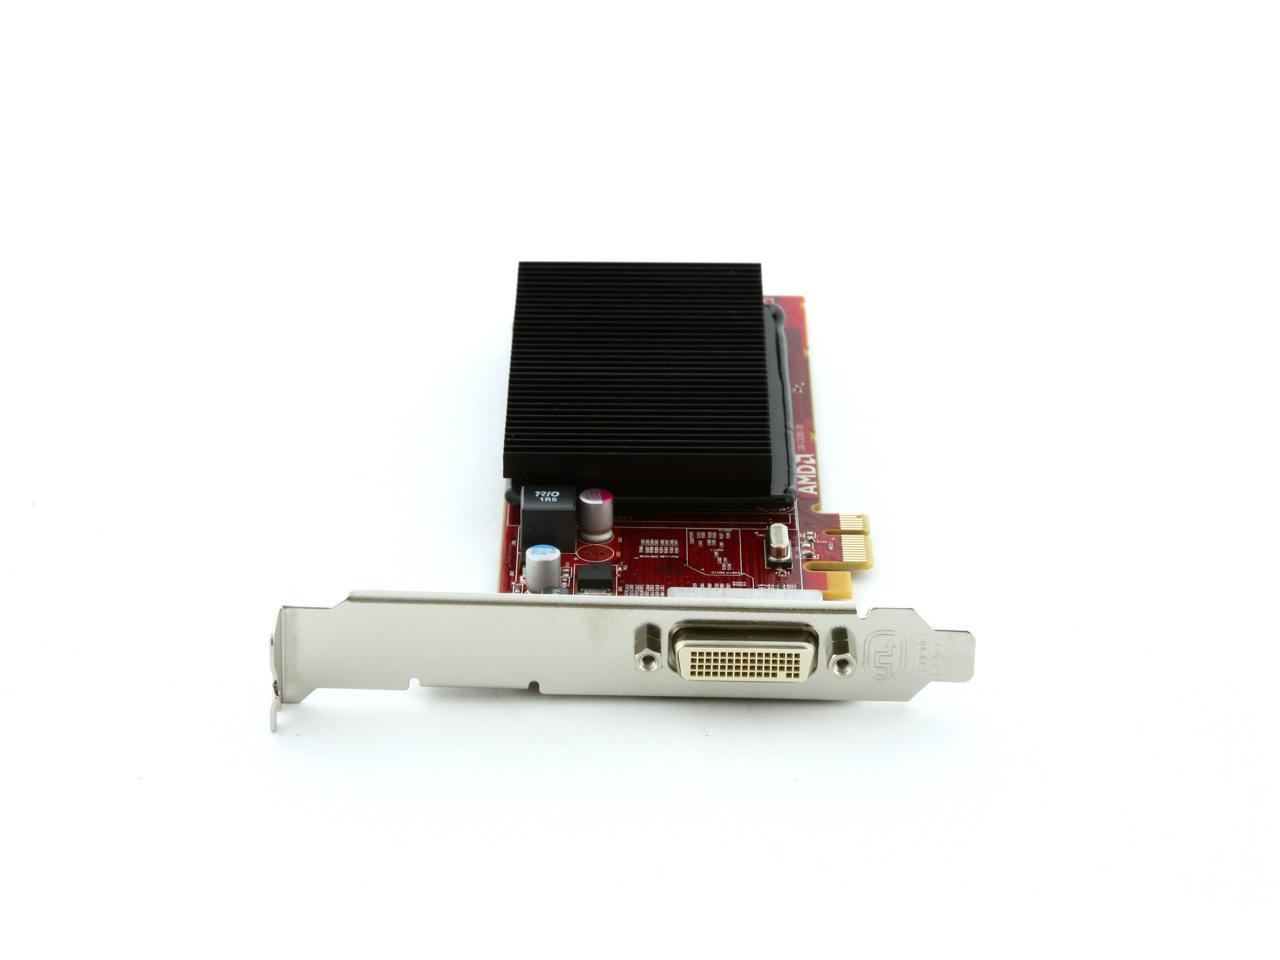 HP 637213-001 512MB PCI-E AMD FirePro 2270 DMS59 Video Card 637166-001 Low Profile 